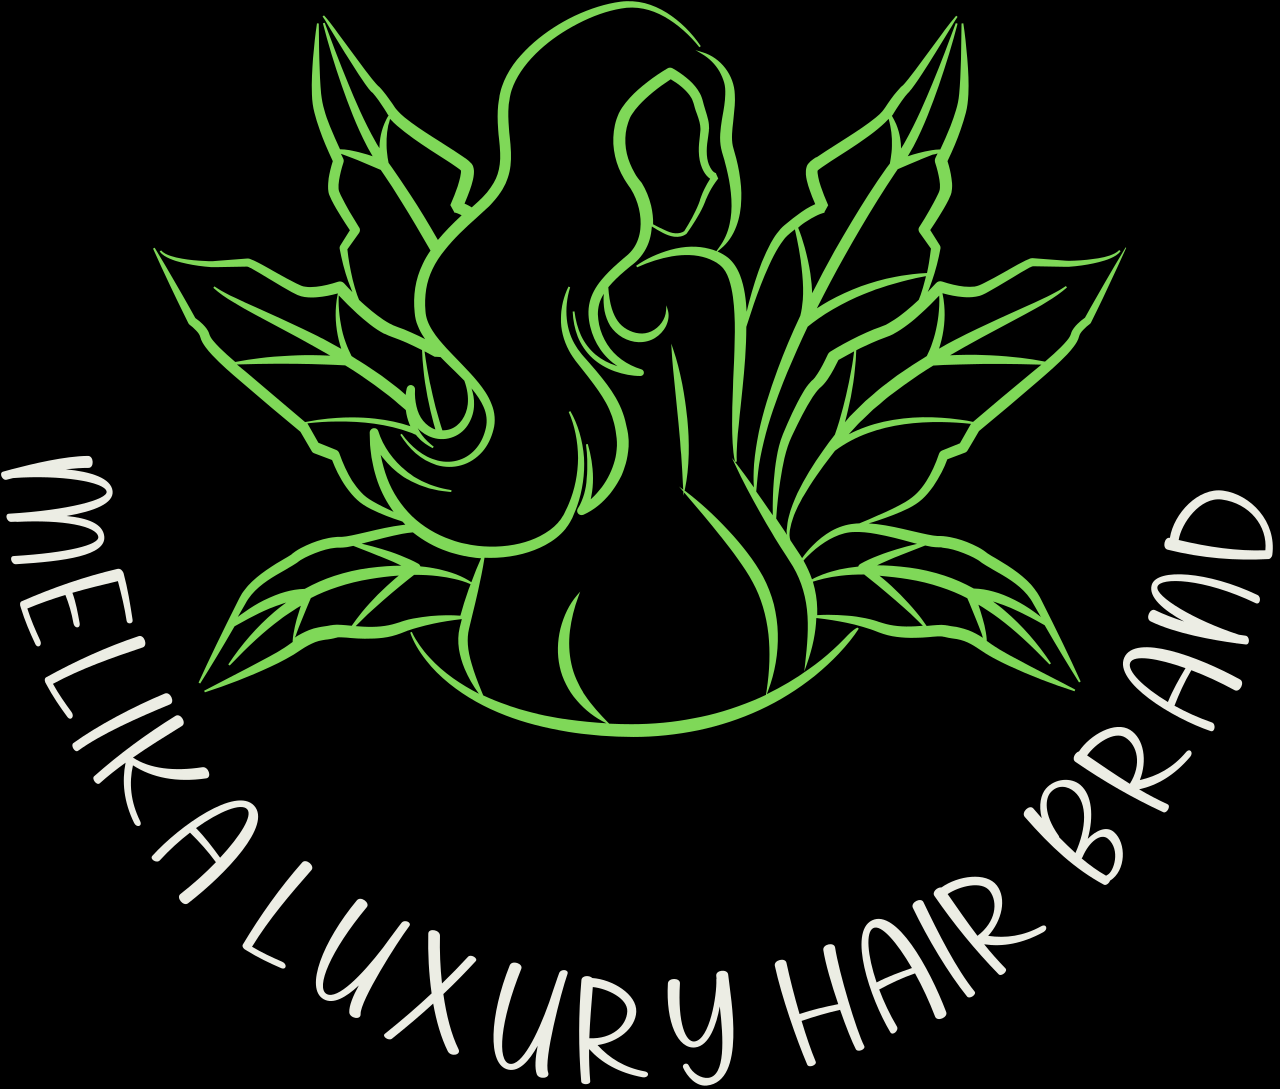 MELIKA LUXURY HAIR BRAND 's web page